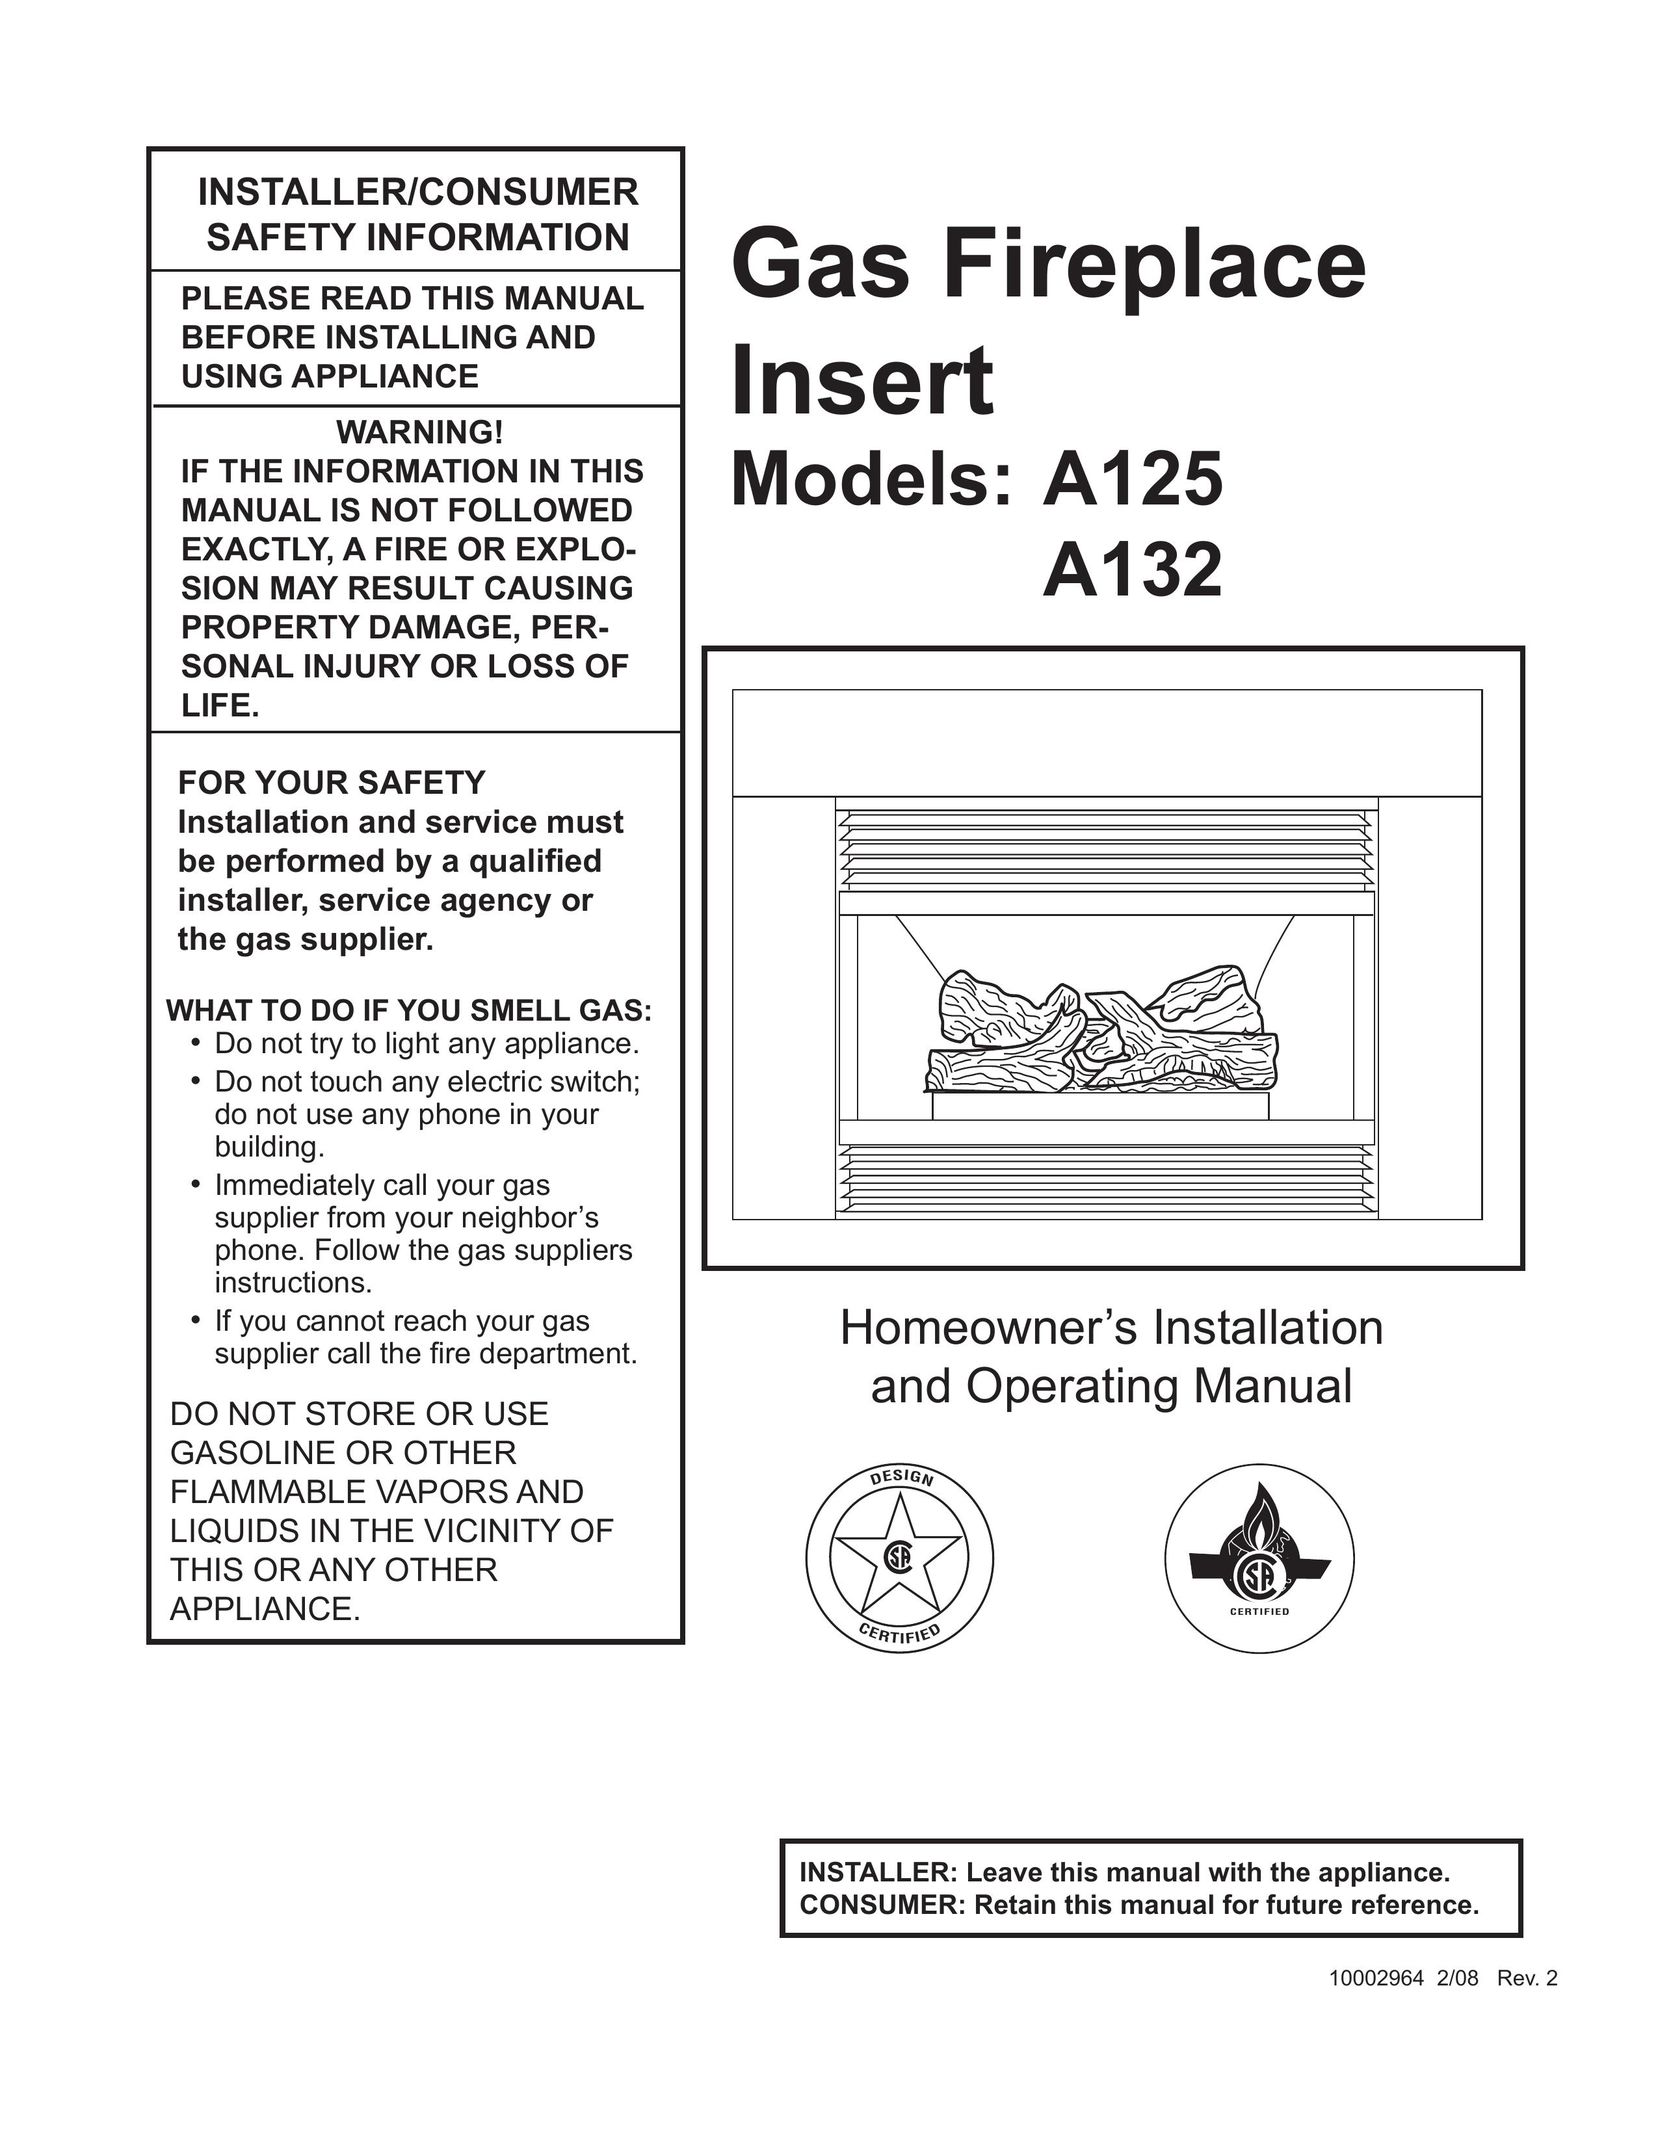 CFM Corporation A132 Indoor Fireplace User Manual